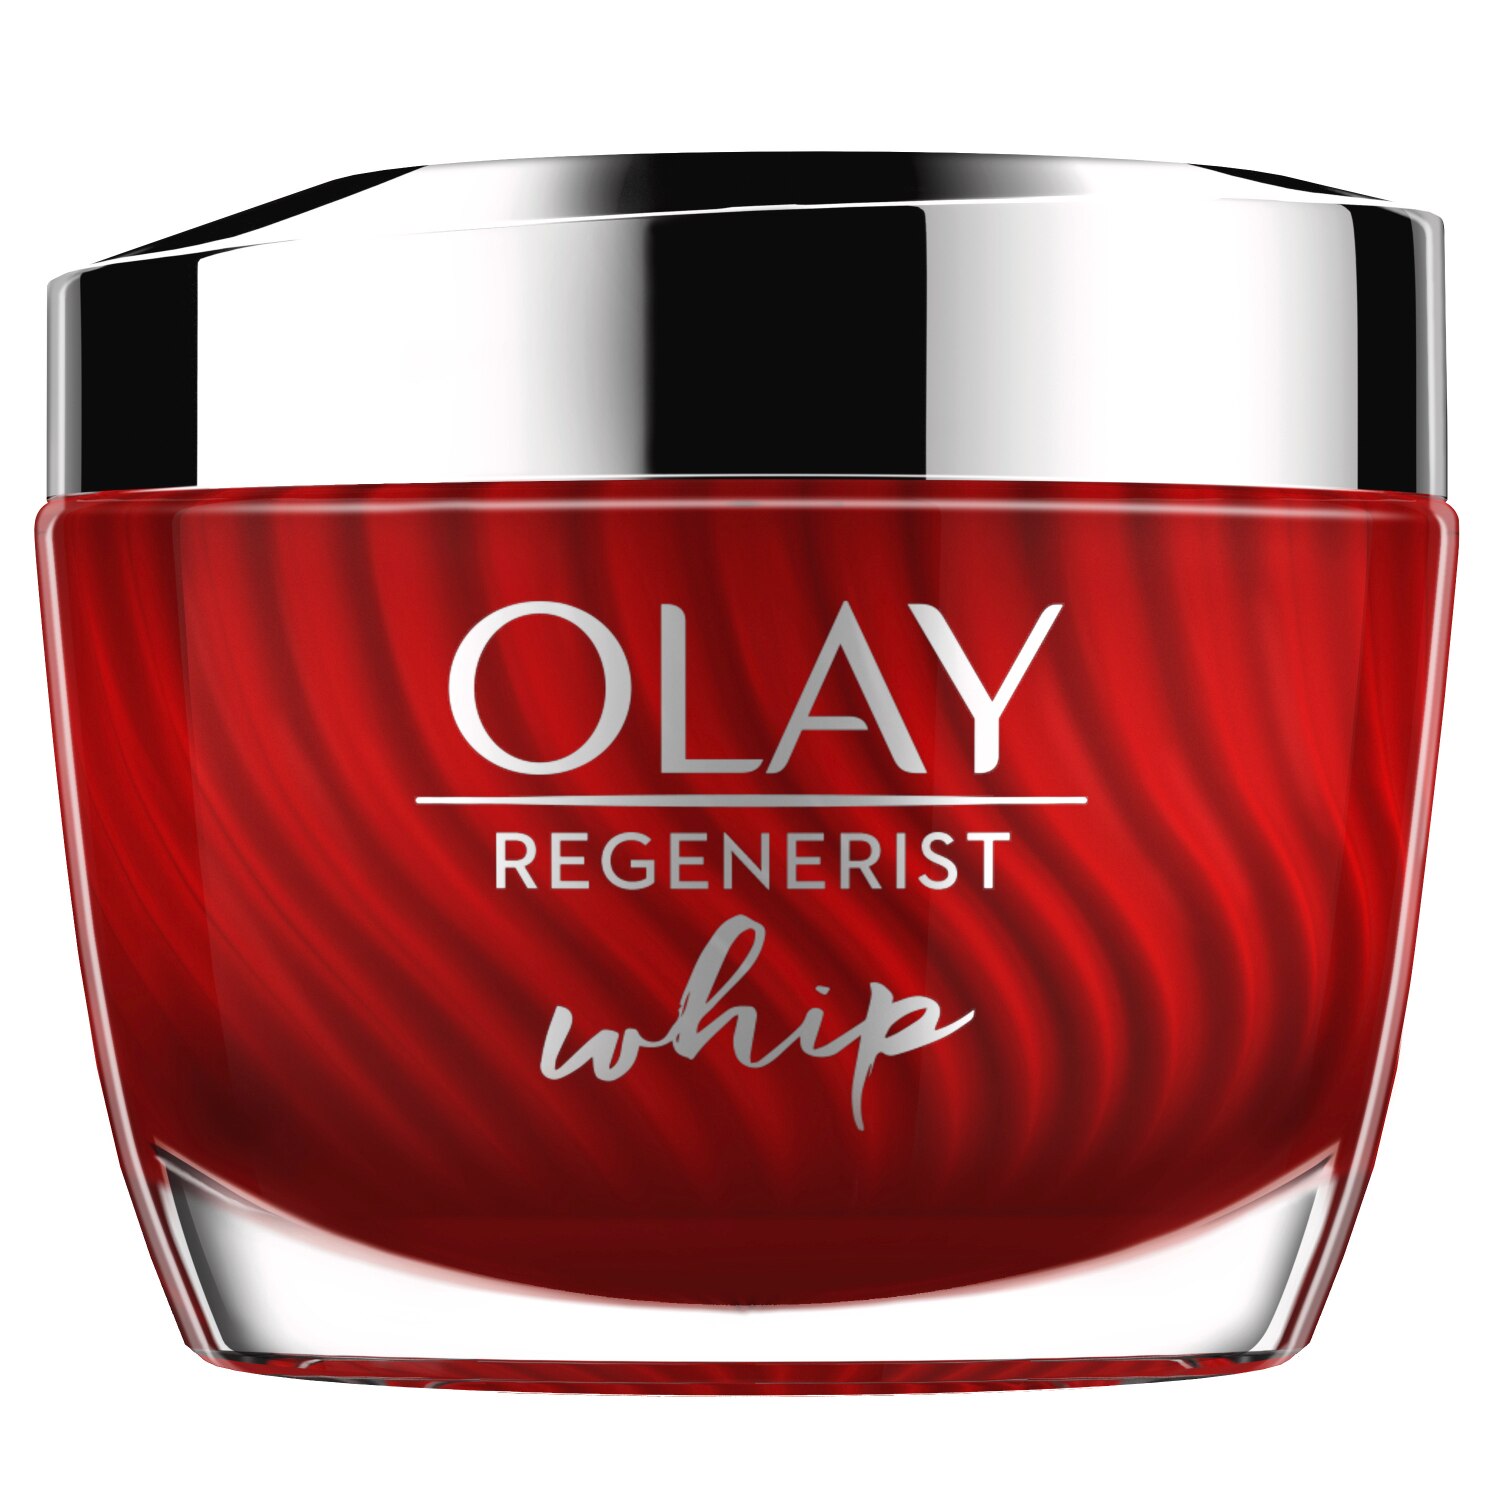 Olay Regenerist Whip Light Face Cream Moisturizer with Hyaluronic Acid, 1.7 OZ